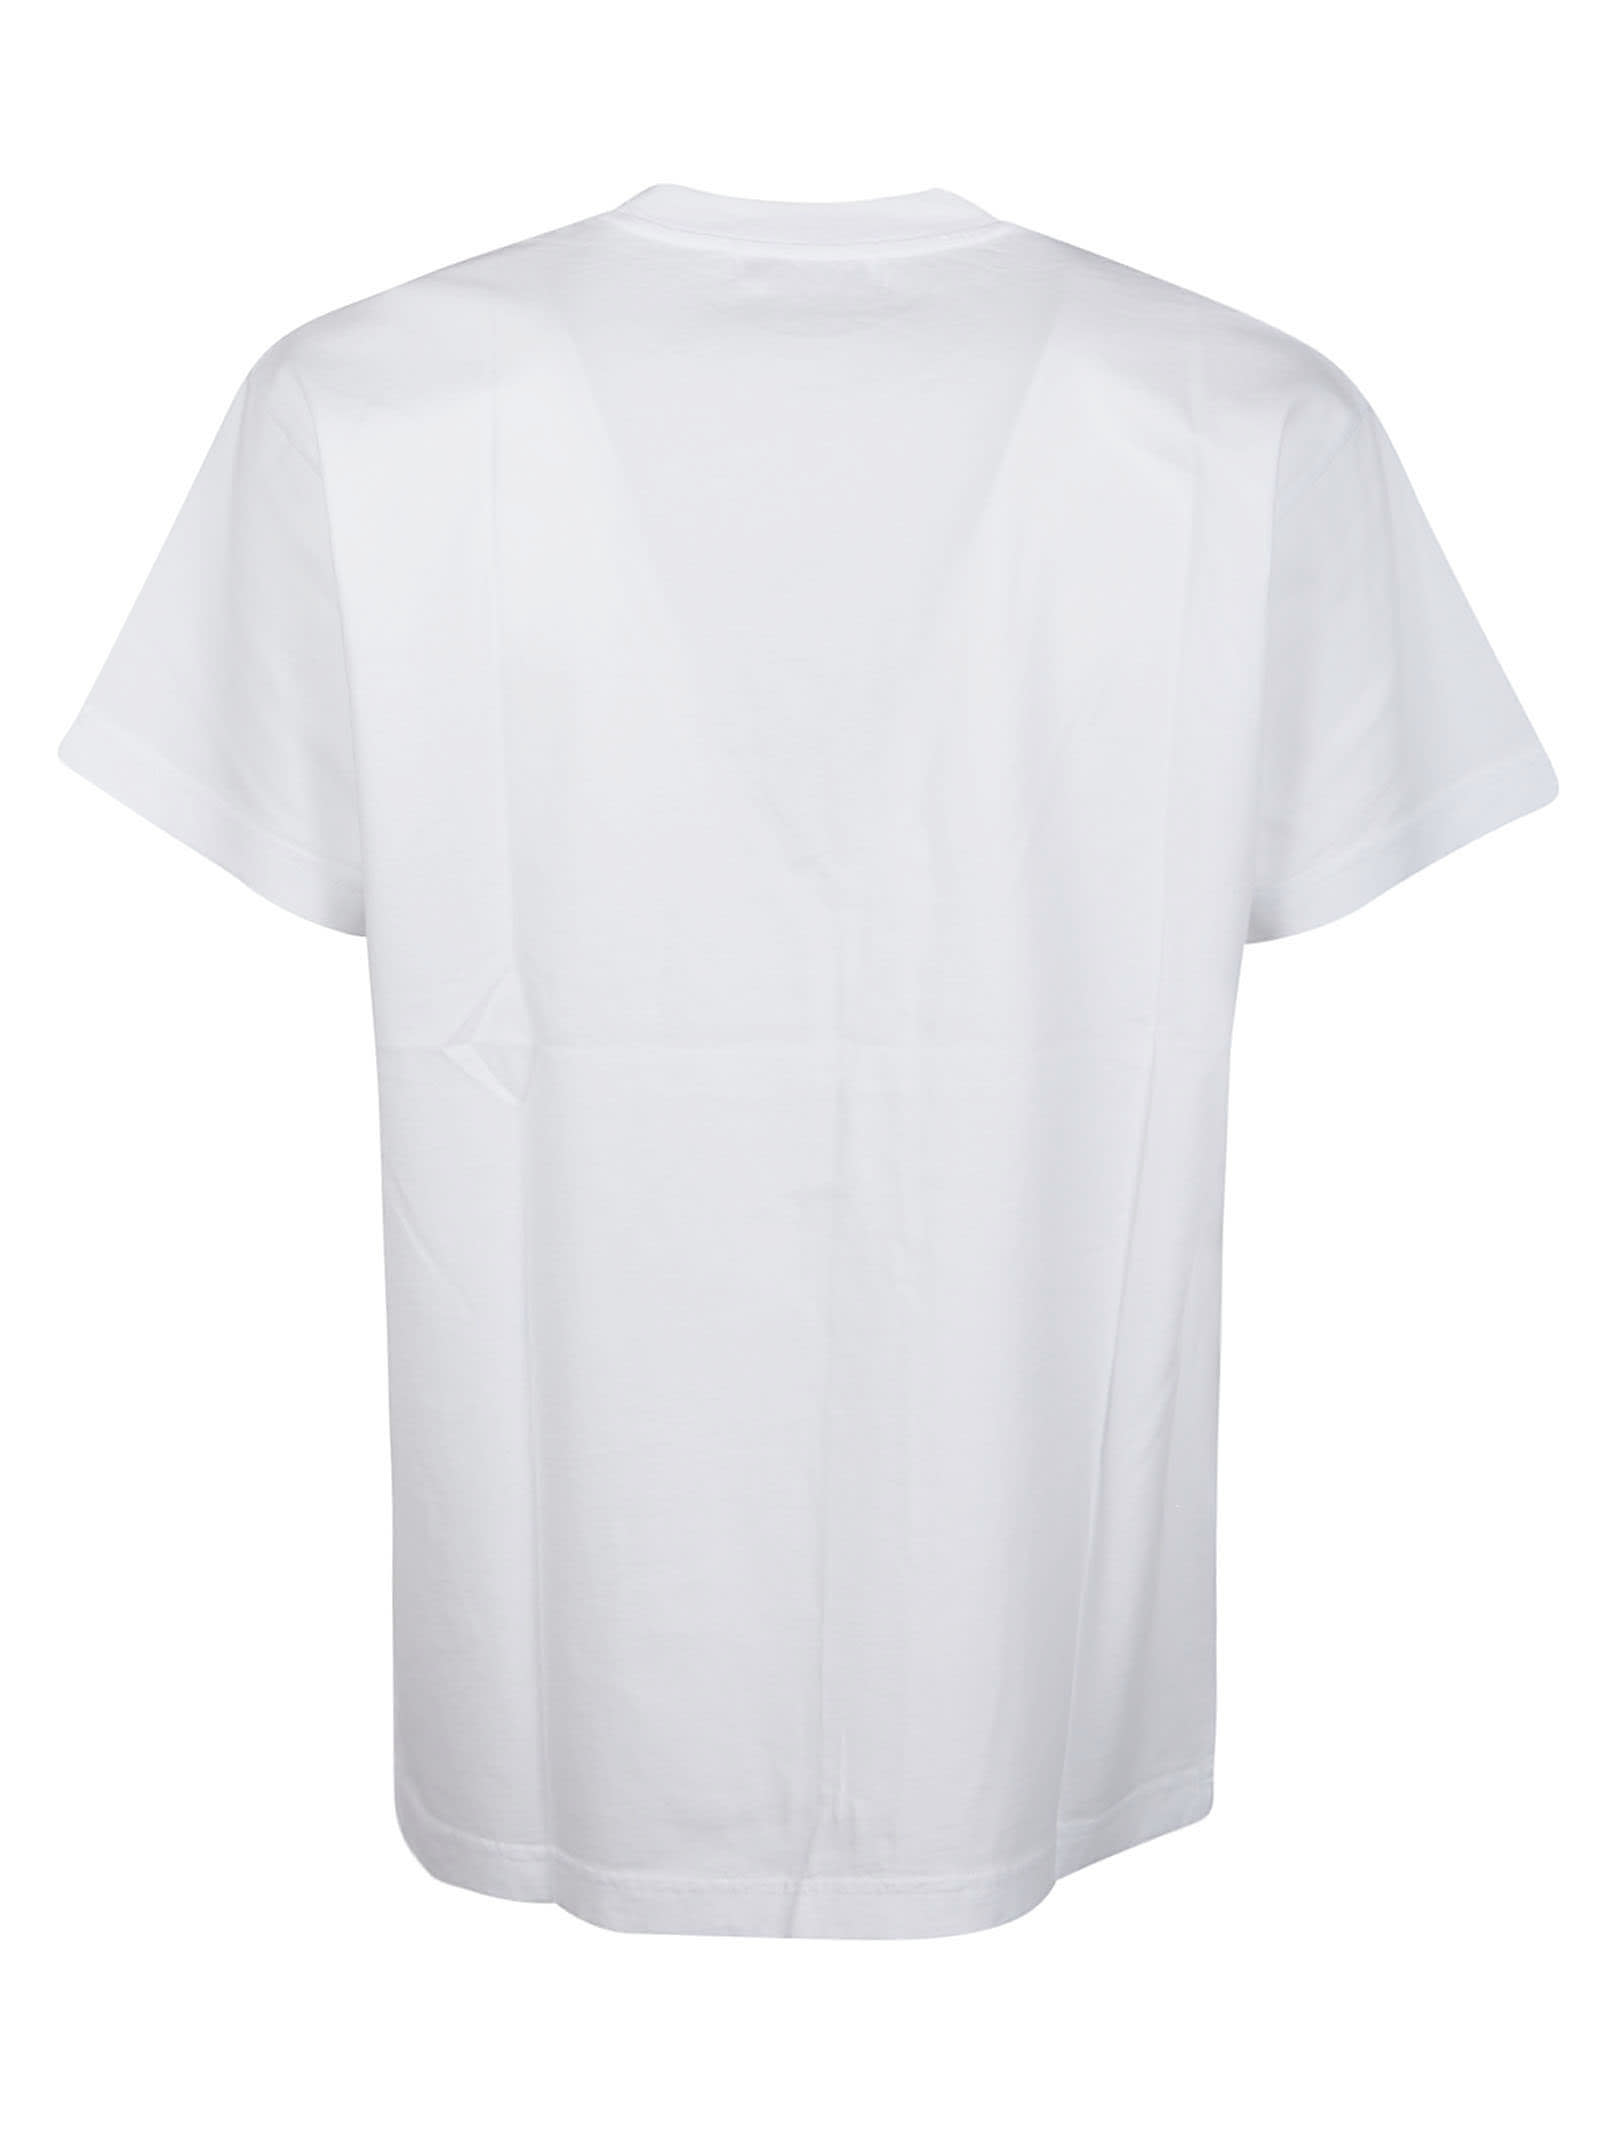 Shop Ambush Tri-pack T-shirt In White No Color